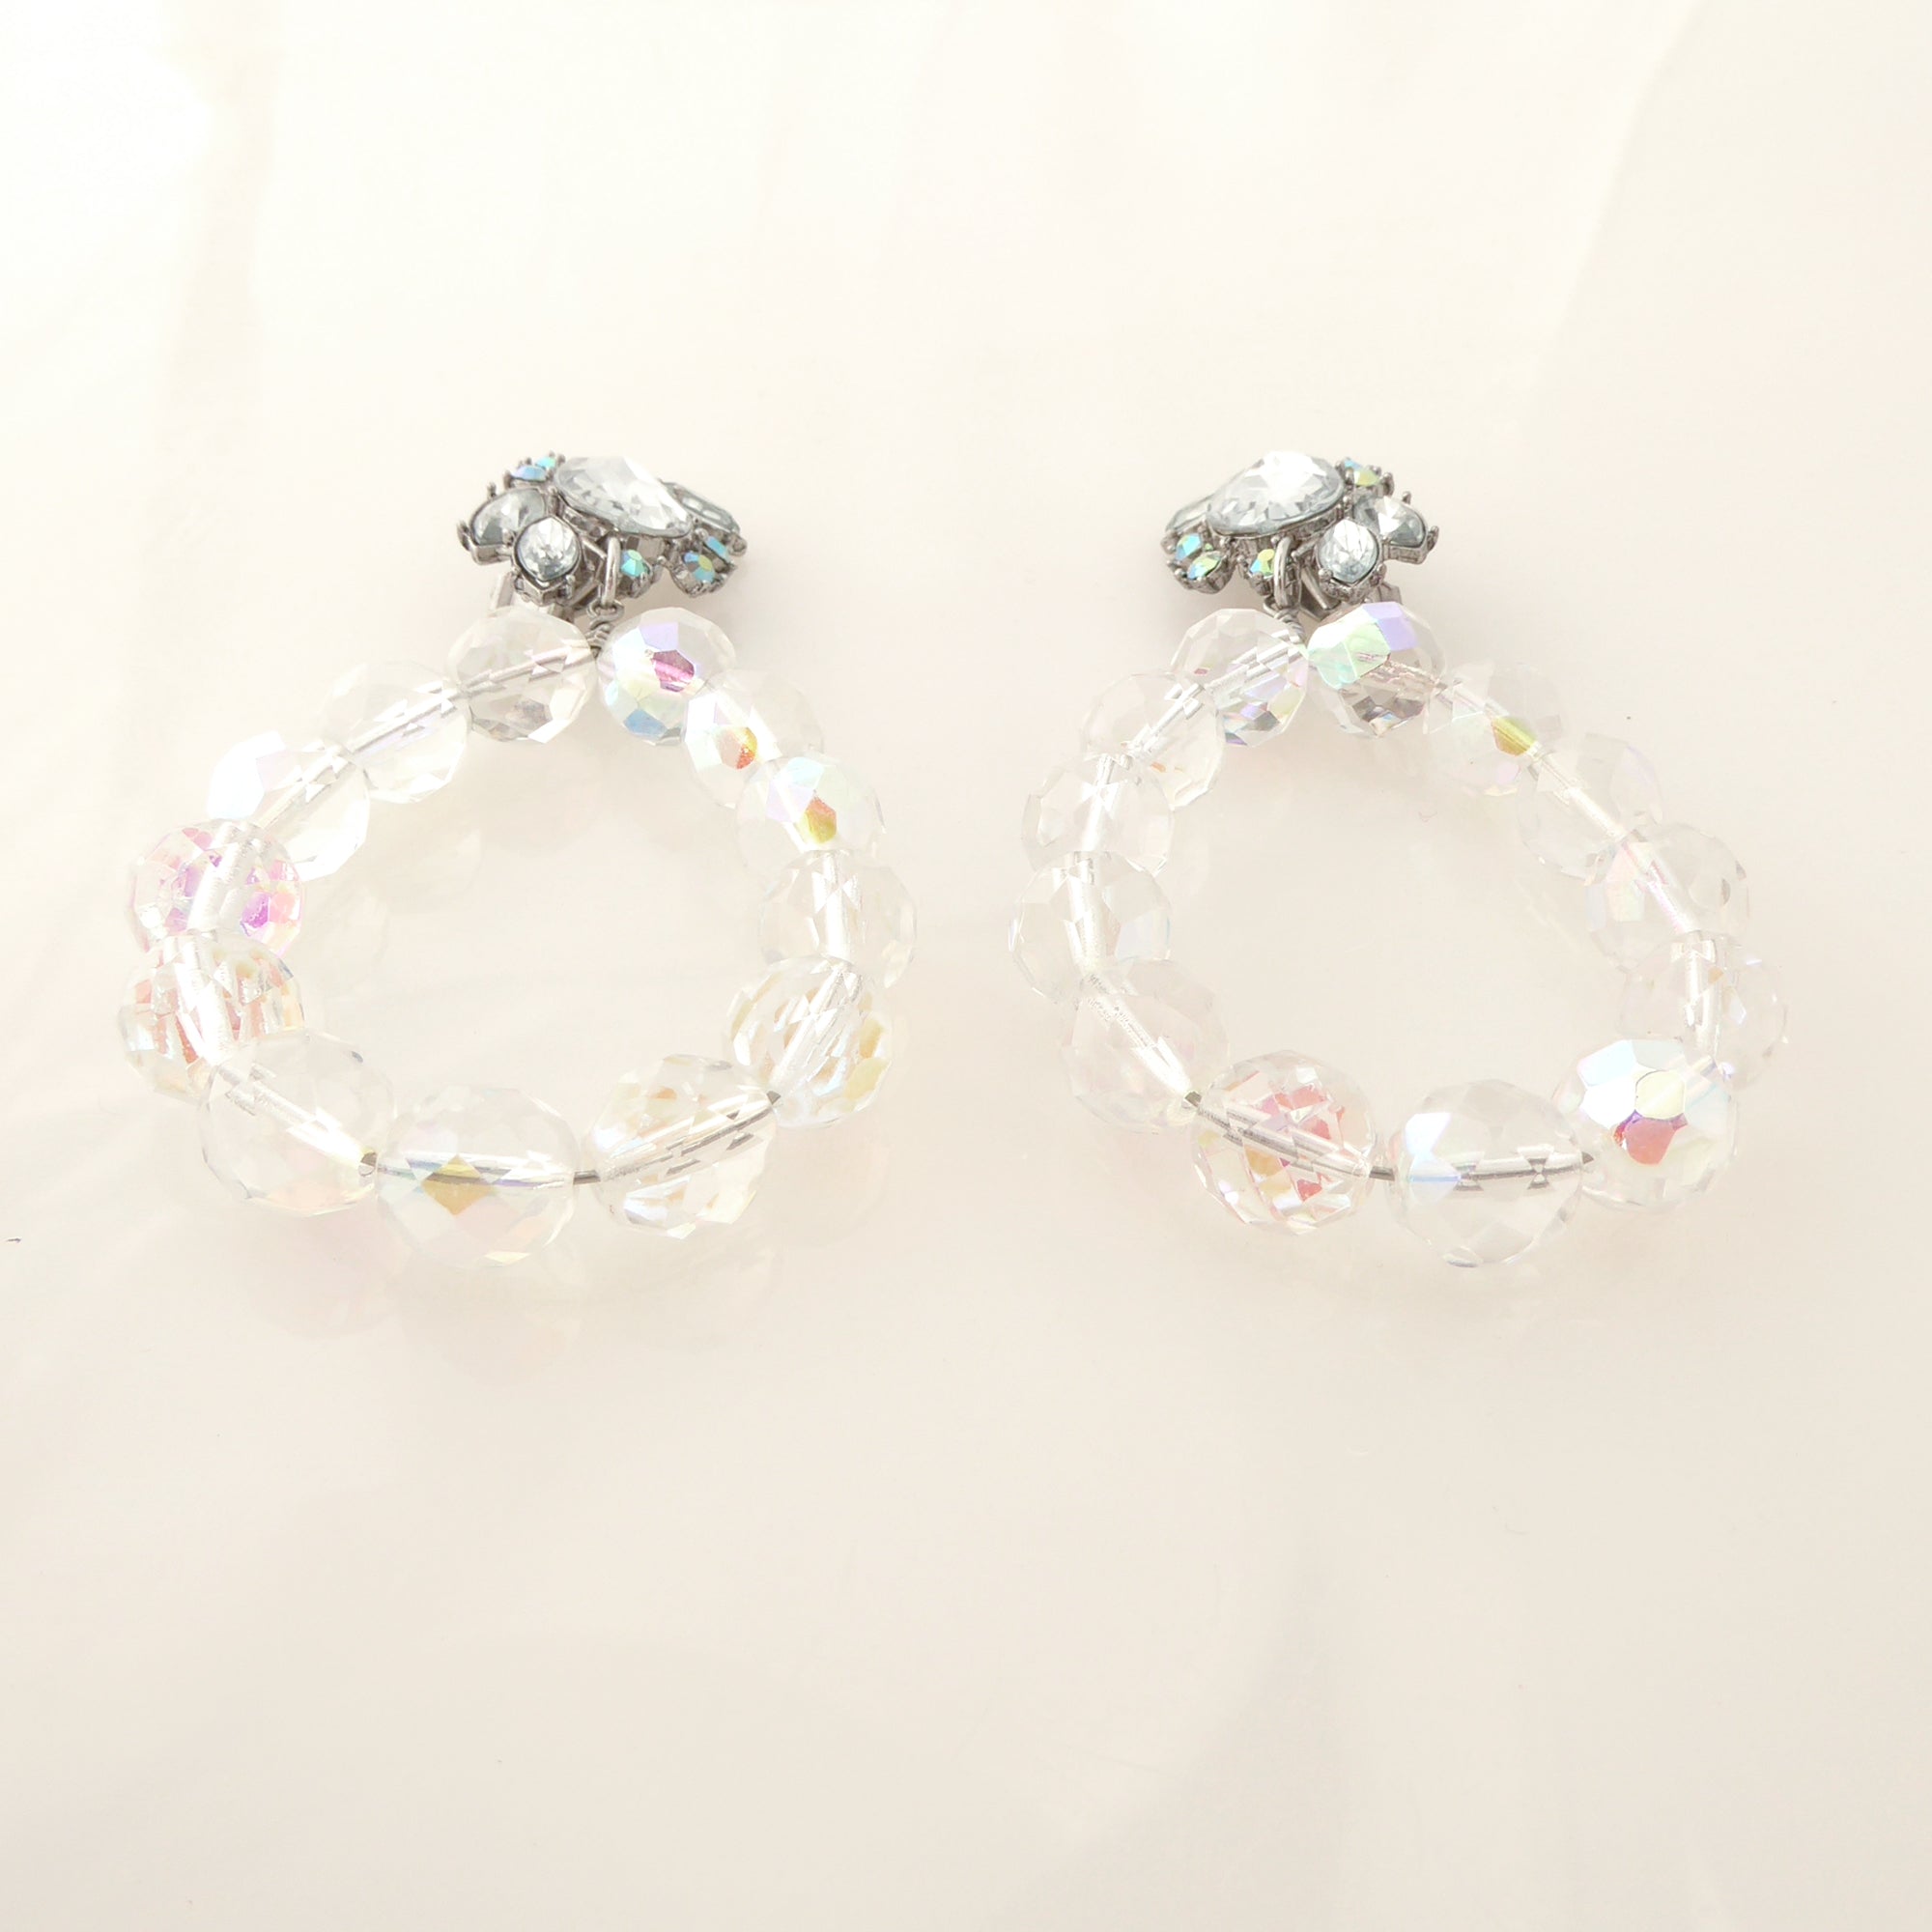 Iridescent glass teardrop earrings by Jenny Dayco 3